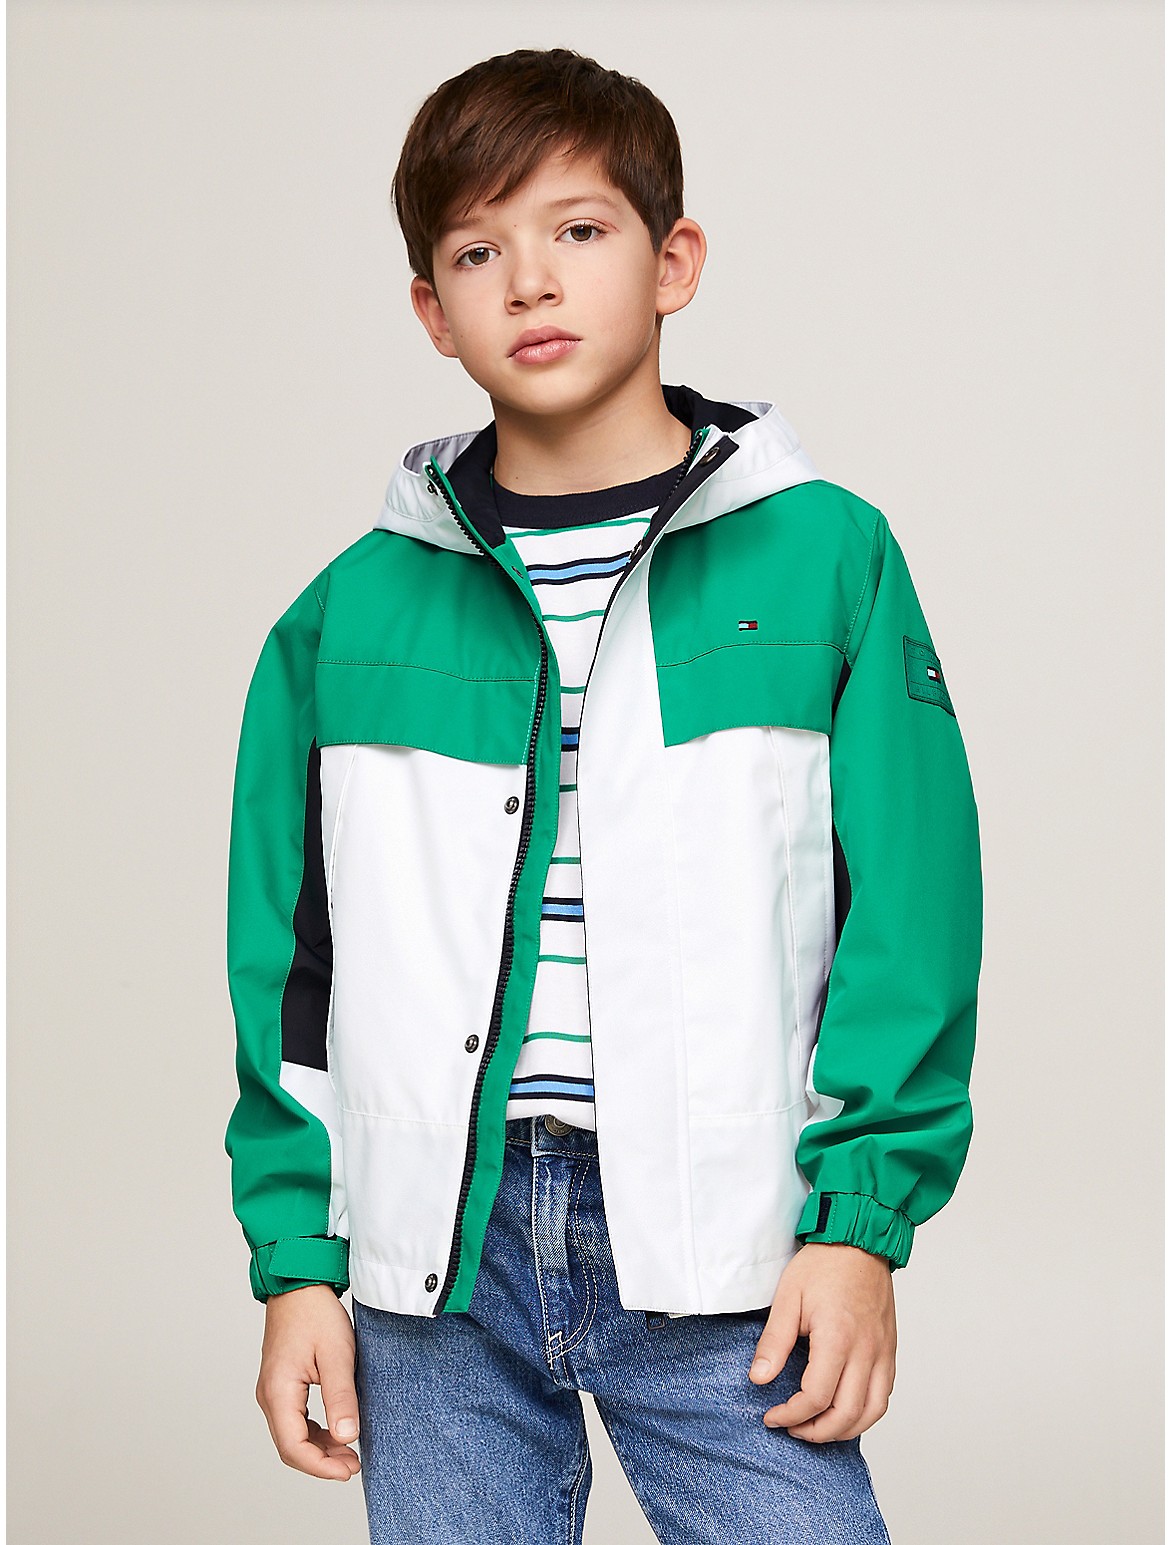 Tommy Hilfiger Boys' Kids' Colorblock Hooded Jacket